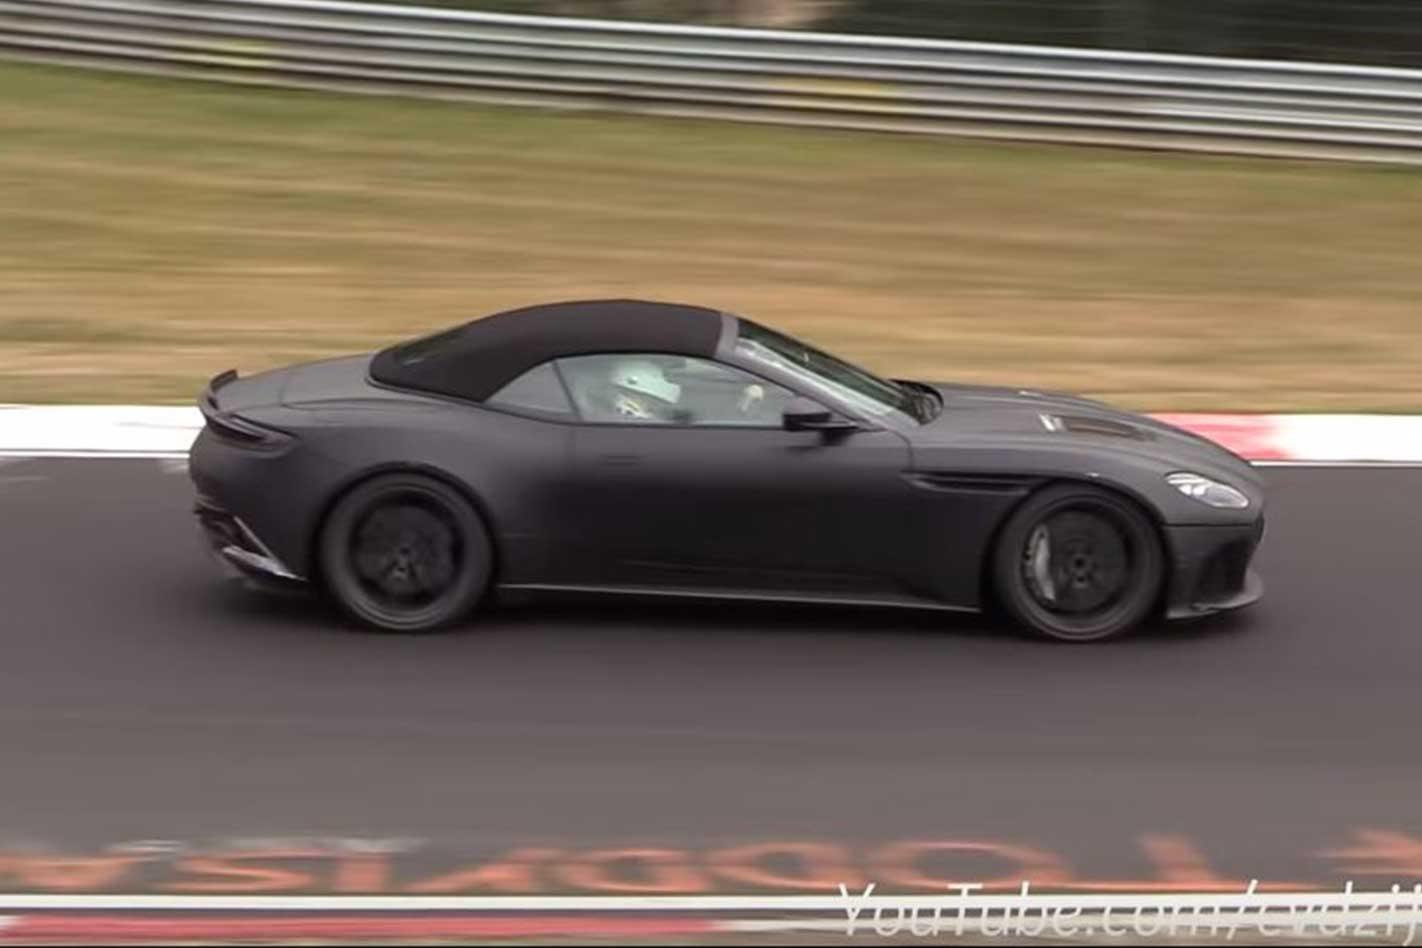 Aston Martin DBS Superleggera Volante testing: Video